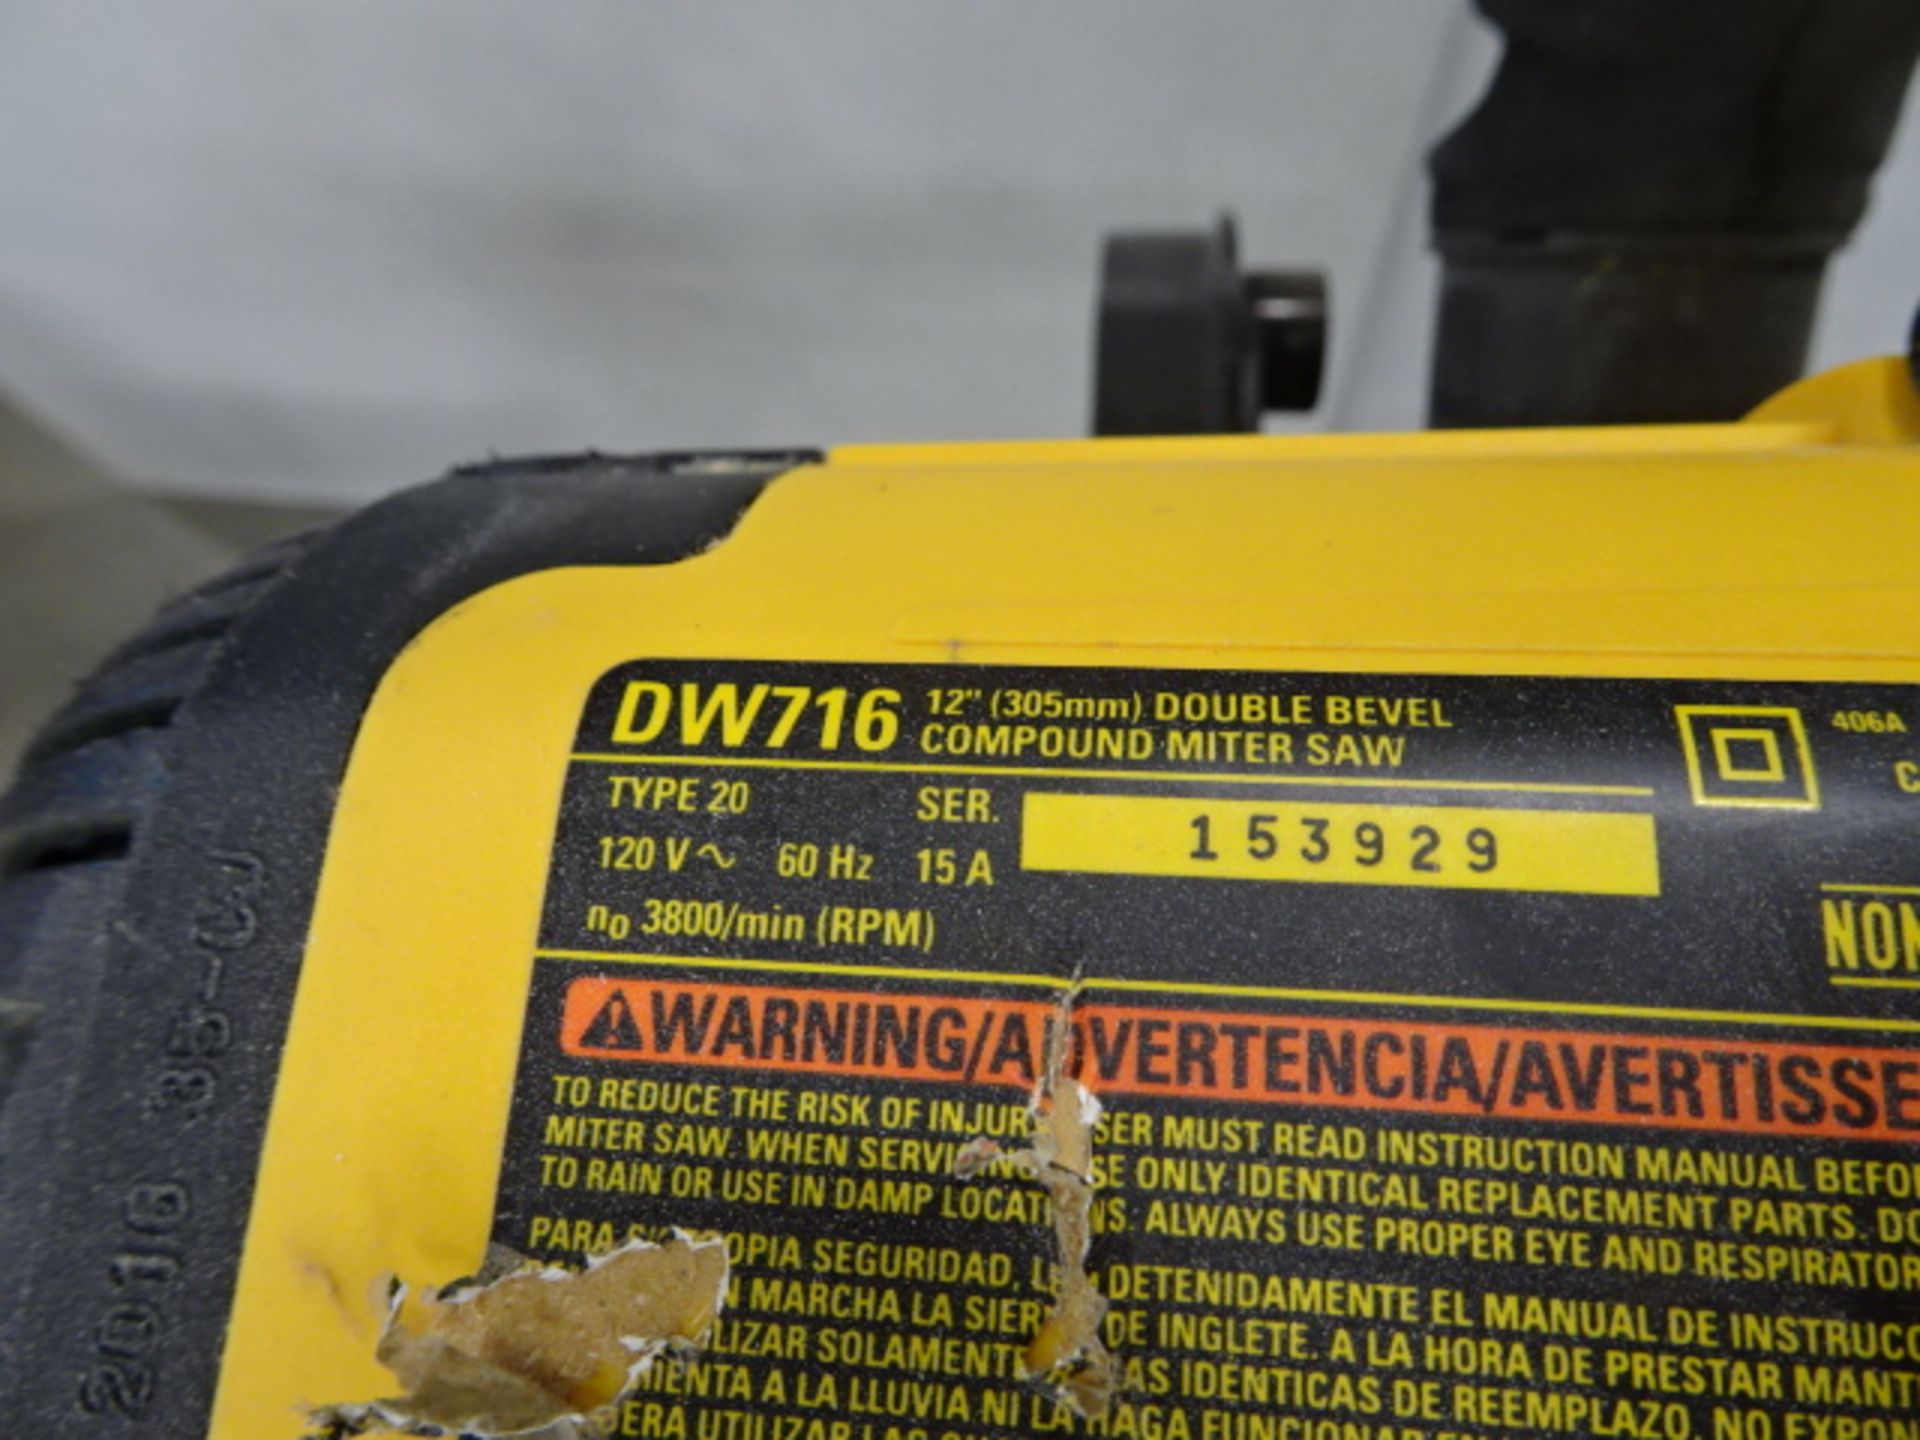 Scie à onglets "Dewalt" DW716 double bevel meter saw - Image 3 of 3